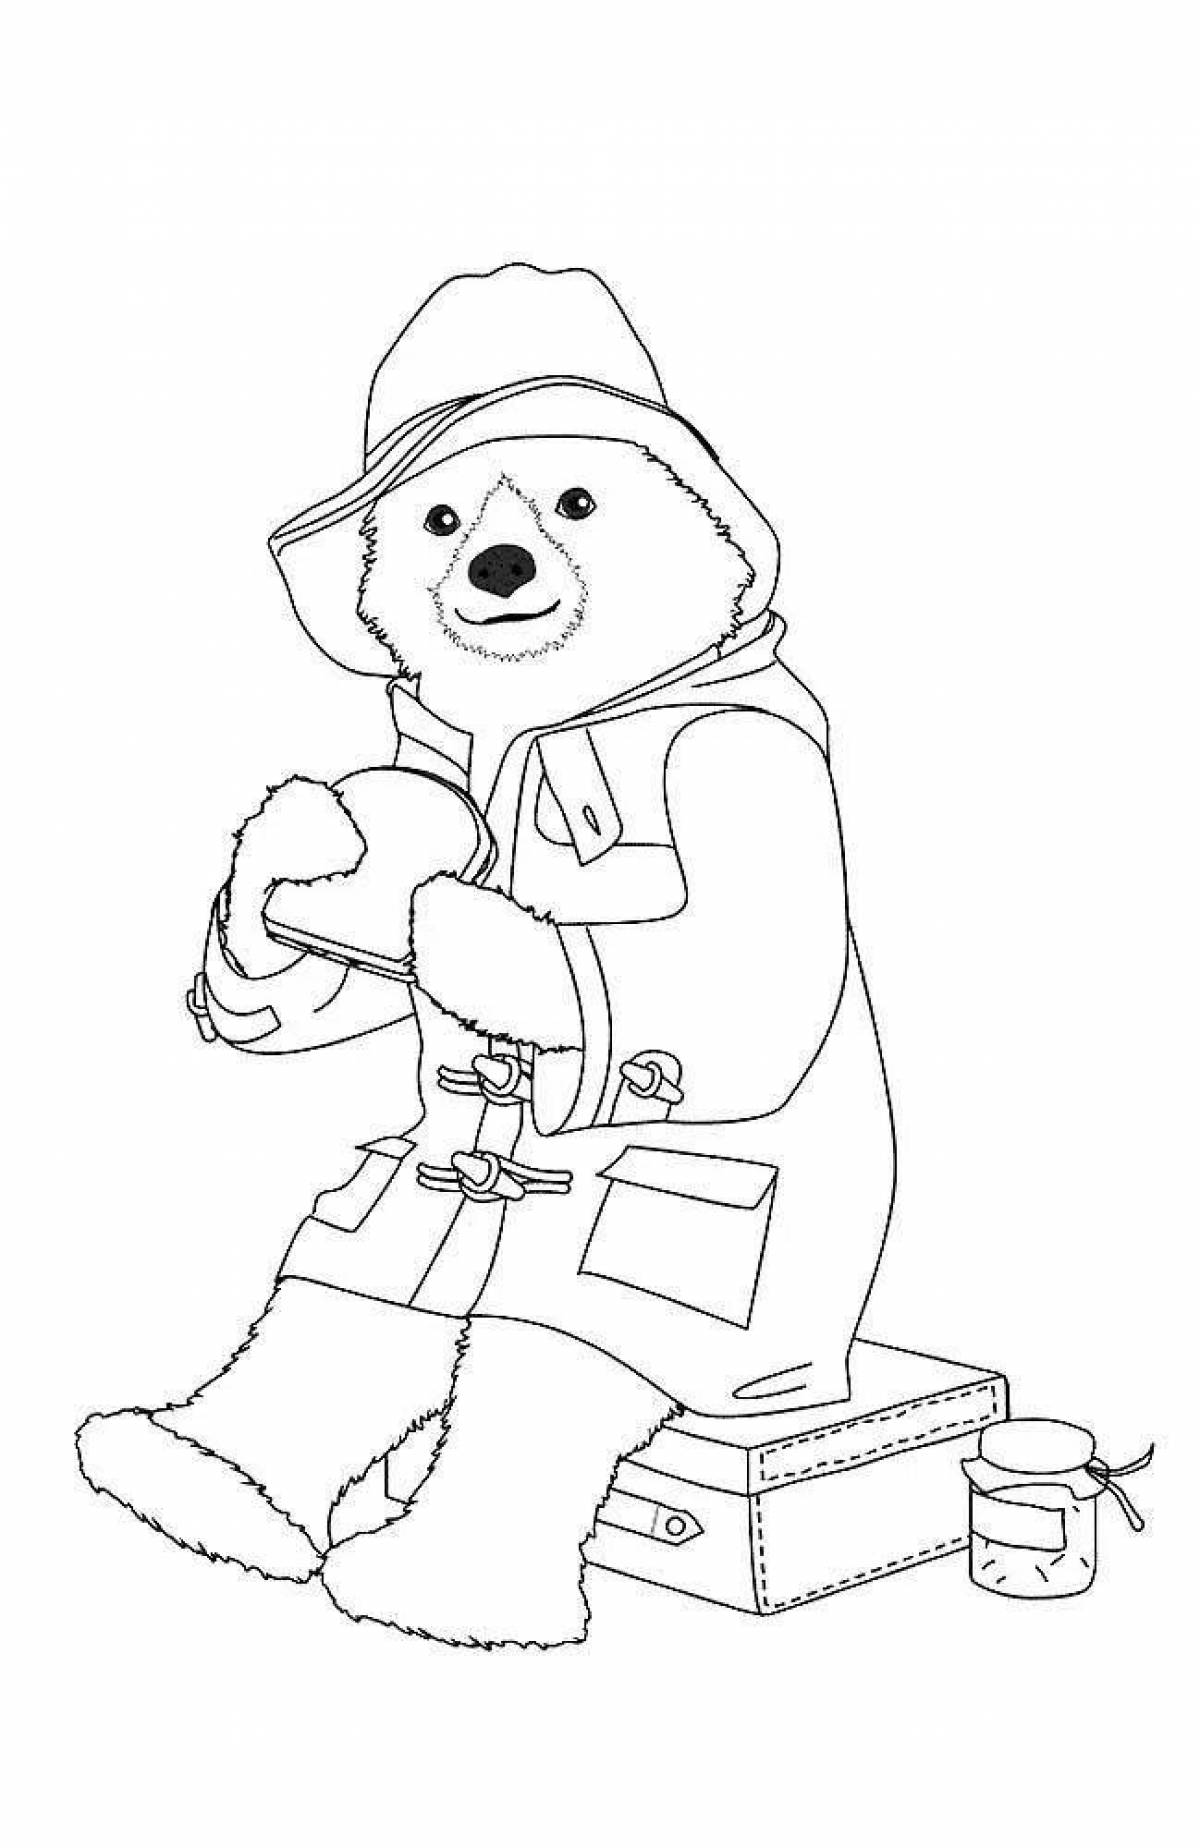 Fancy paddington bear coloring book